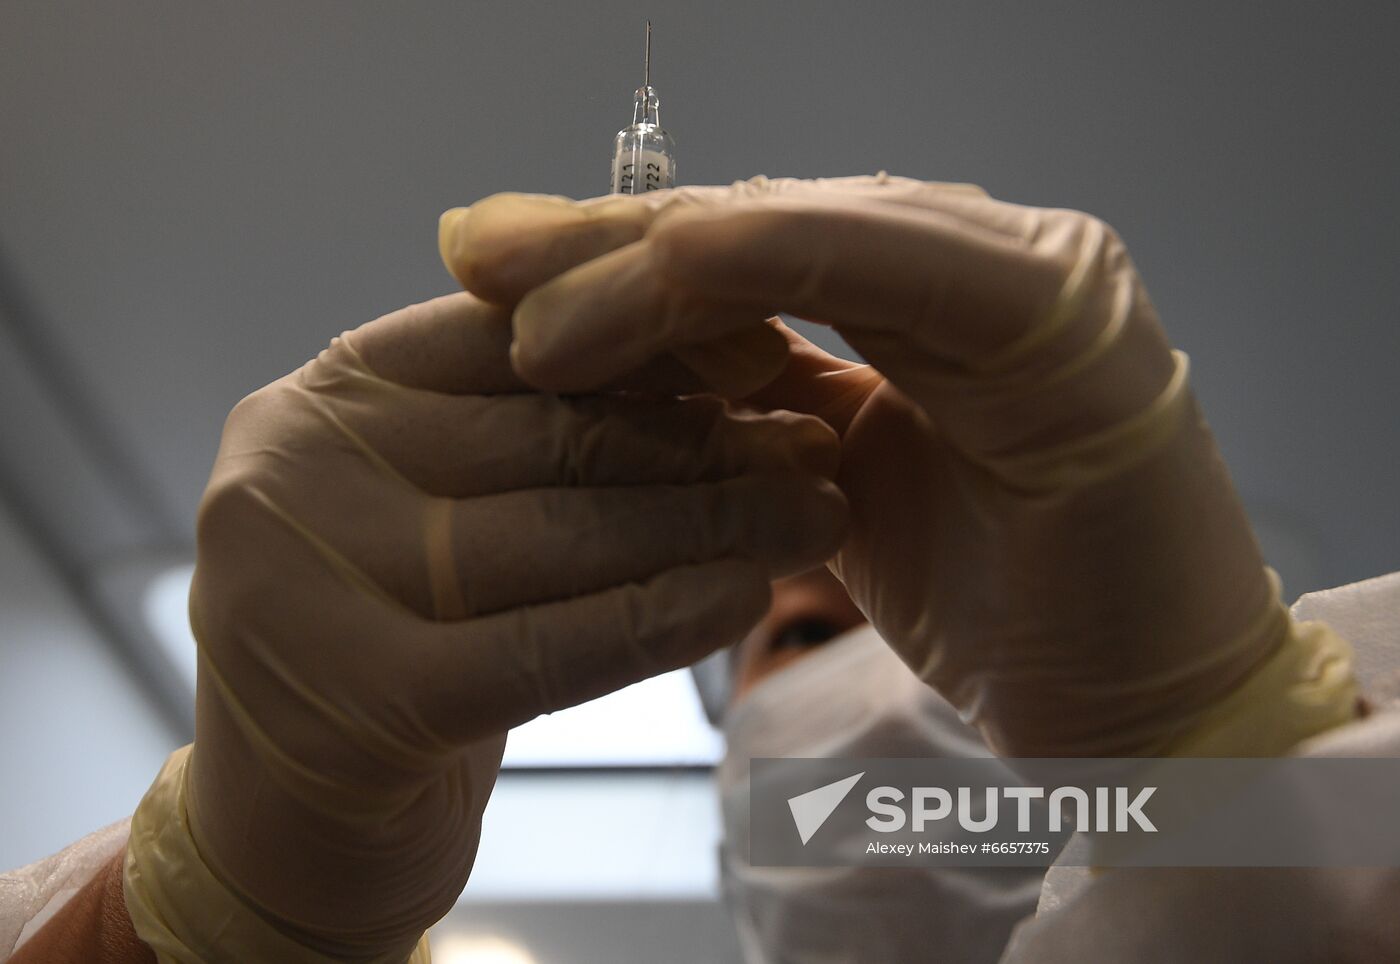 Russia Influenza Vaccination